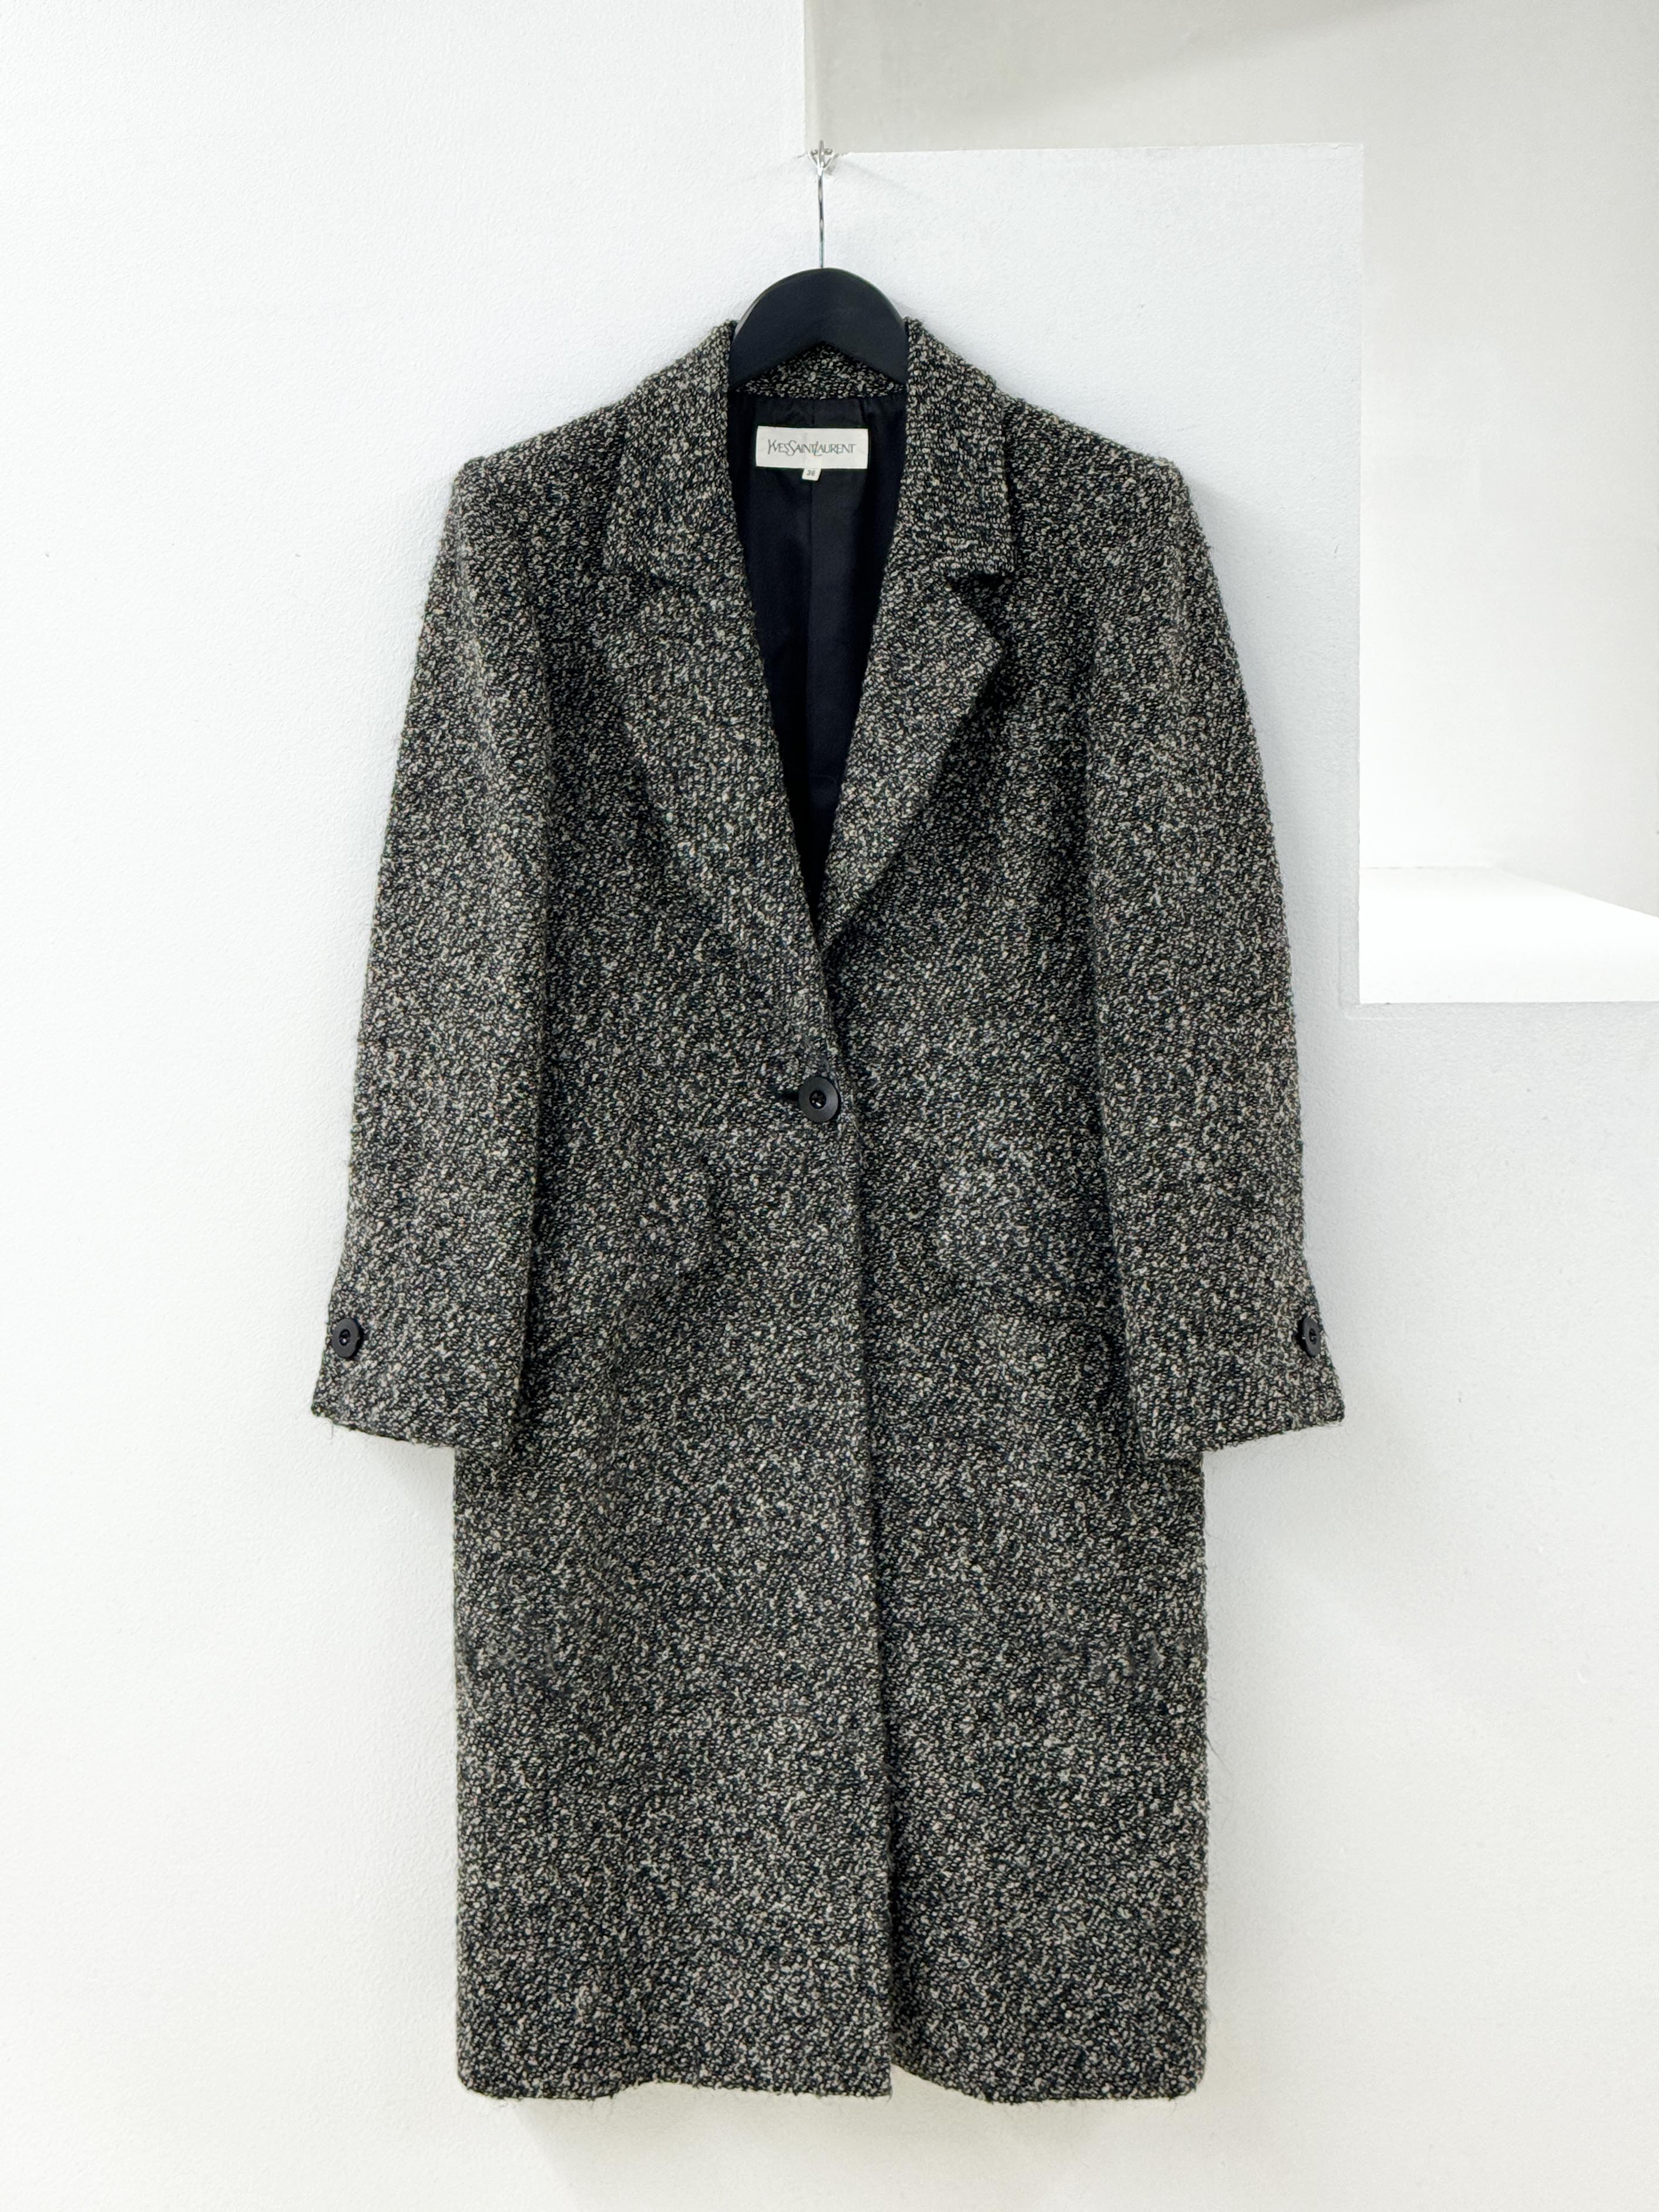 Yves Saint Laurent tweed coat